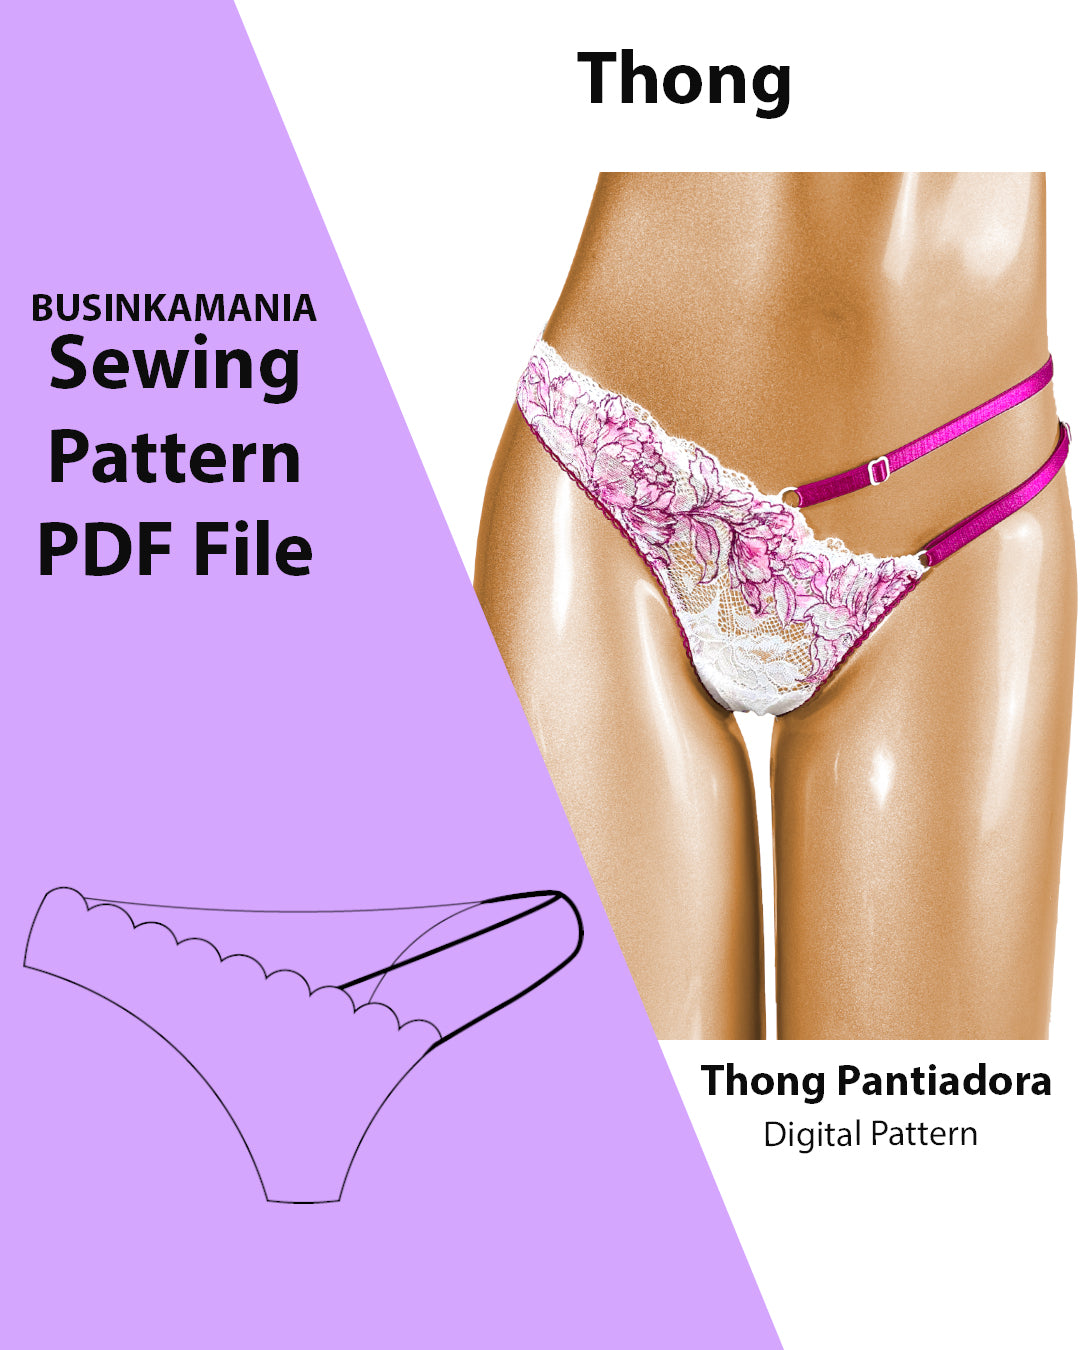 Buy ENGLISH PDF Digital Sewing Pattern, STELLA Panties Lingerie